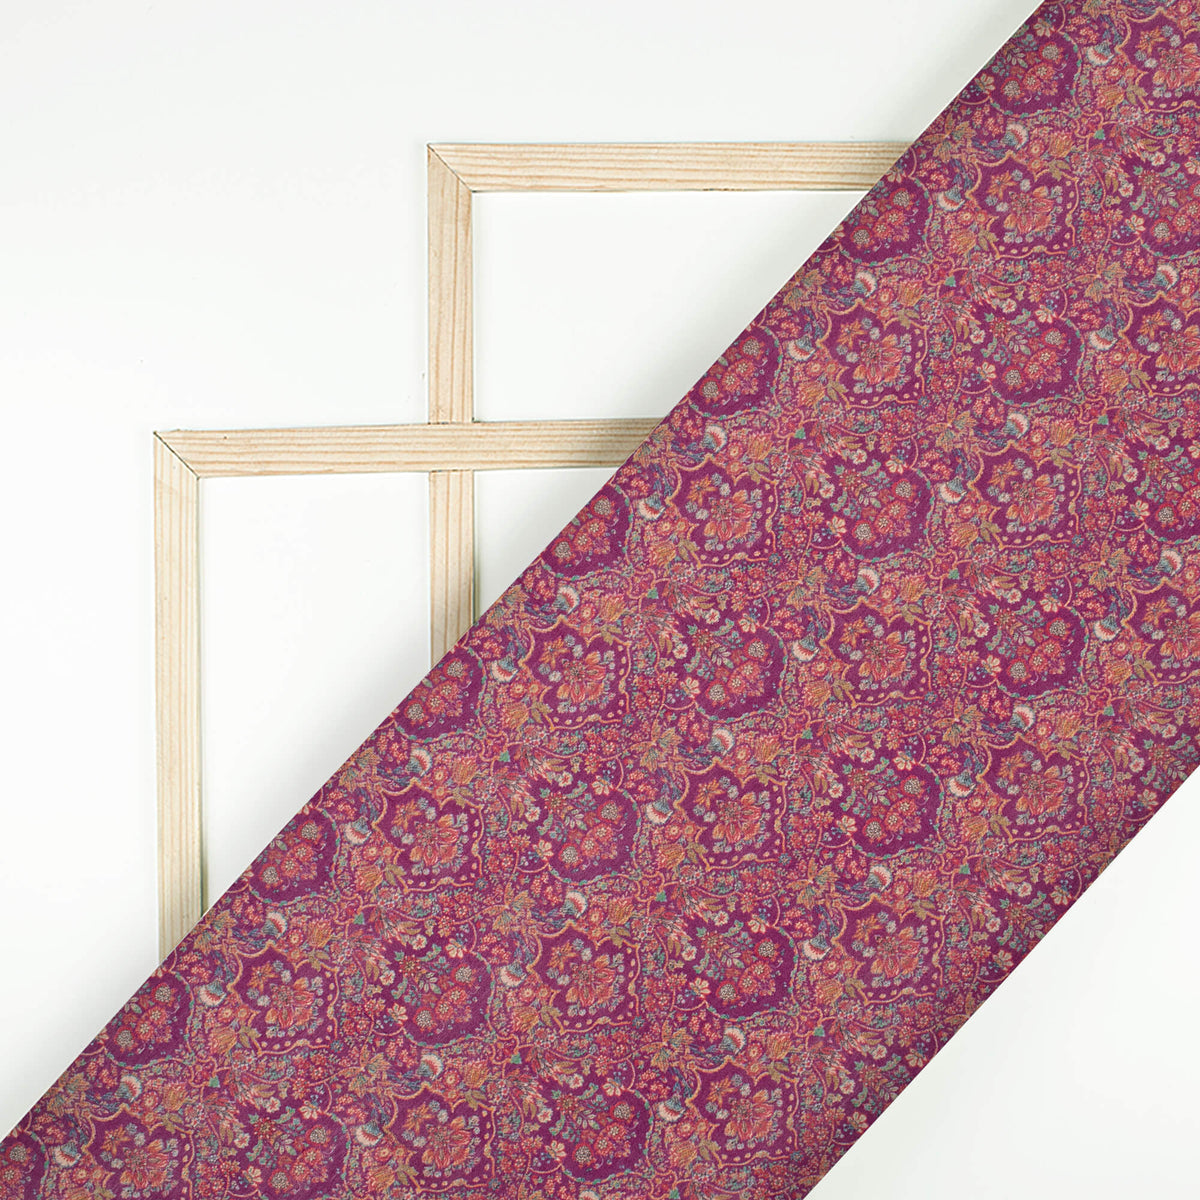 Sangria Purple And Dark Orange Floral Pattern Digital Print Viscose Chanderi Fabric